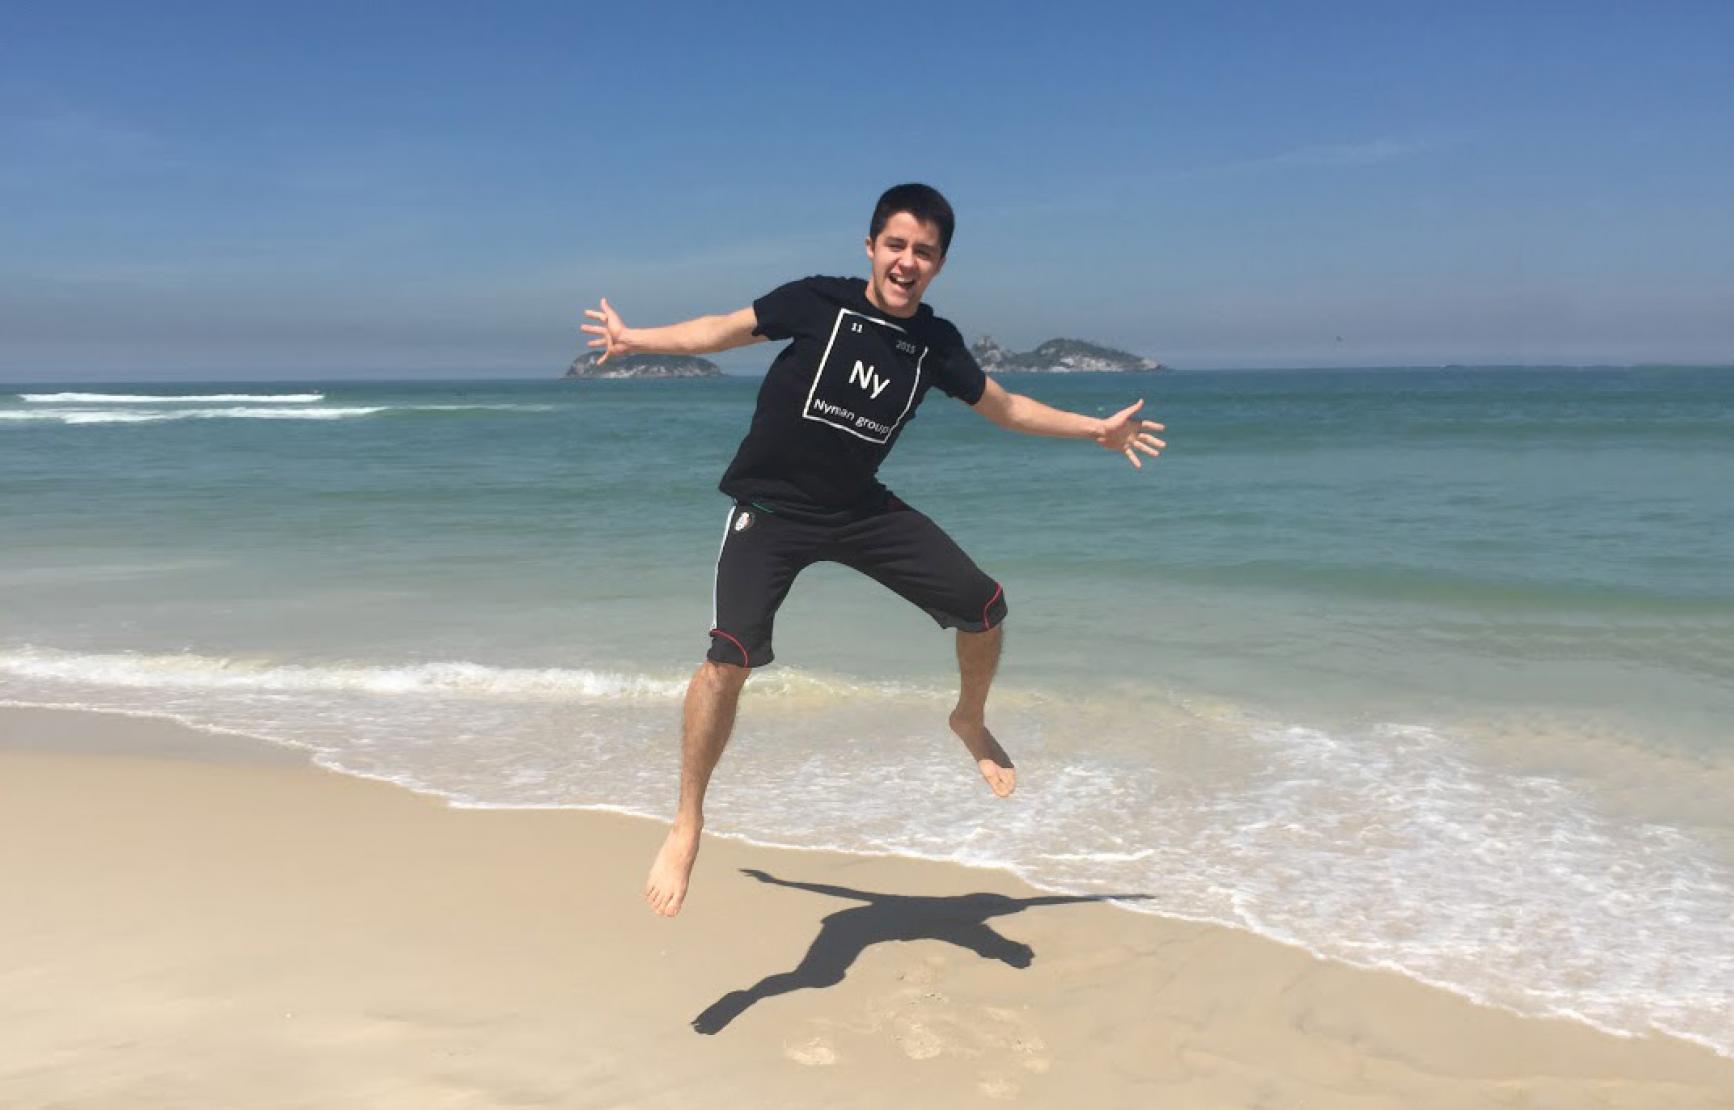 Collin Muniz wearing a chemistry t-shirt jumping on the beach